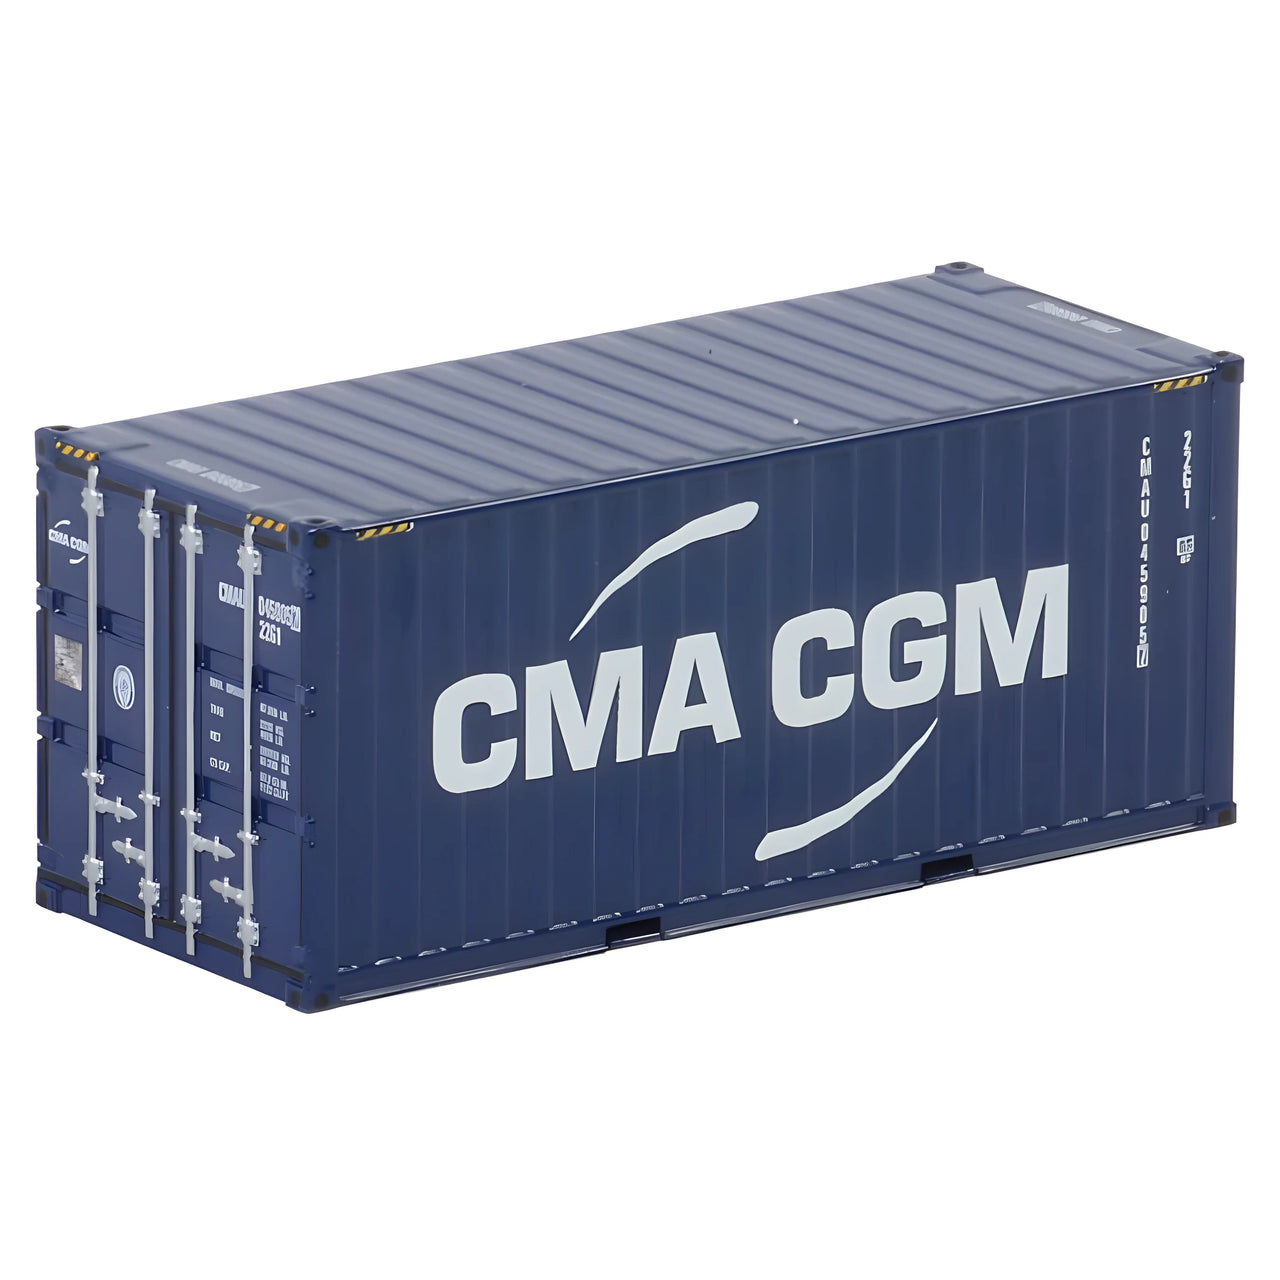 04-2083 Container CMA GGM 20' Escala 1:50 (Pre-Venta)